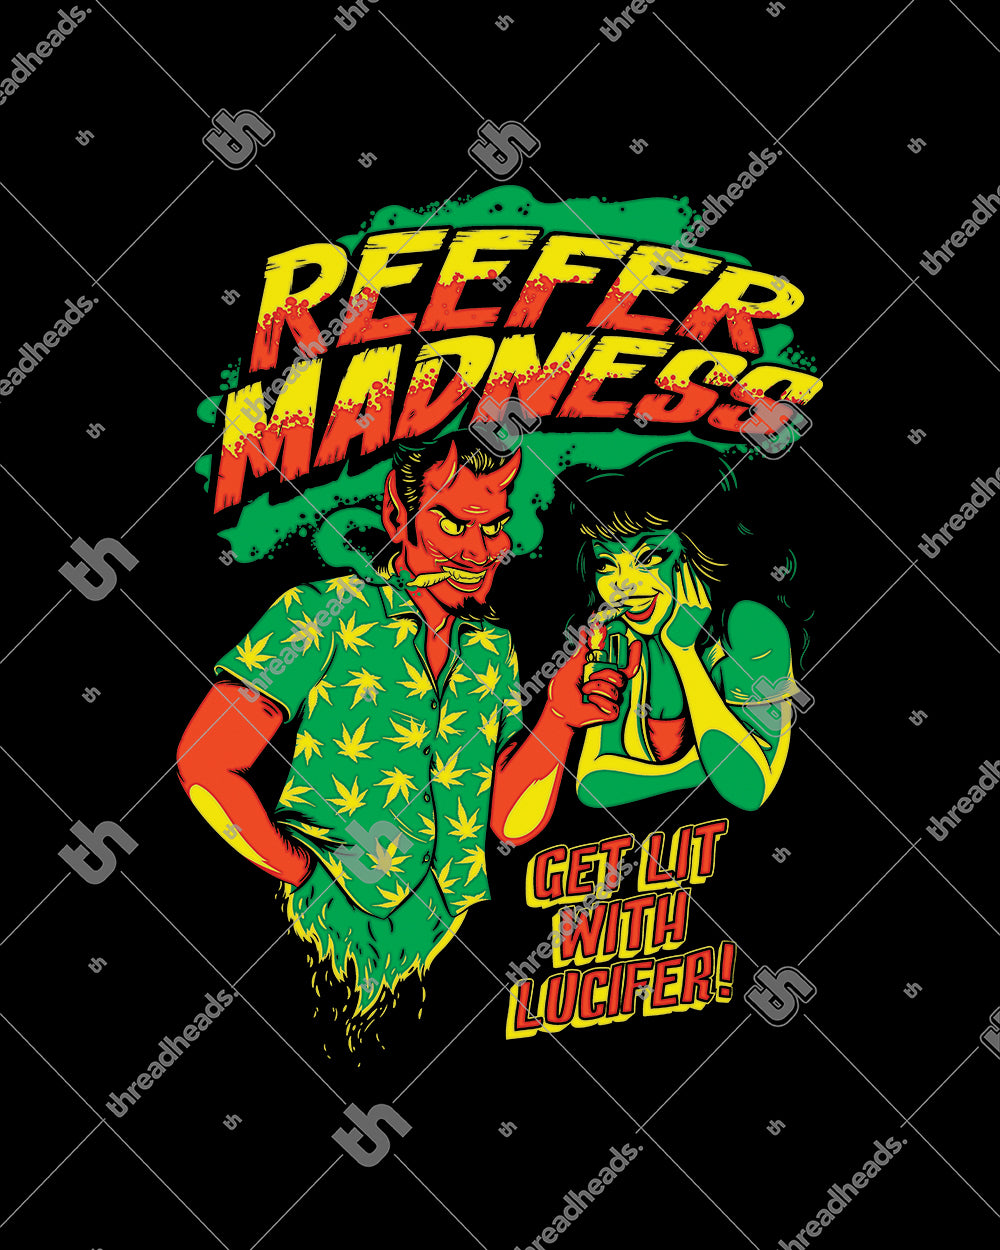 Reefer Madness Long Sleeve Australia Online #colour_black